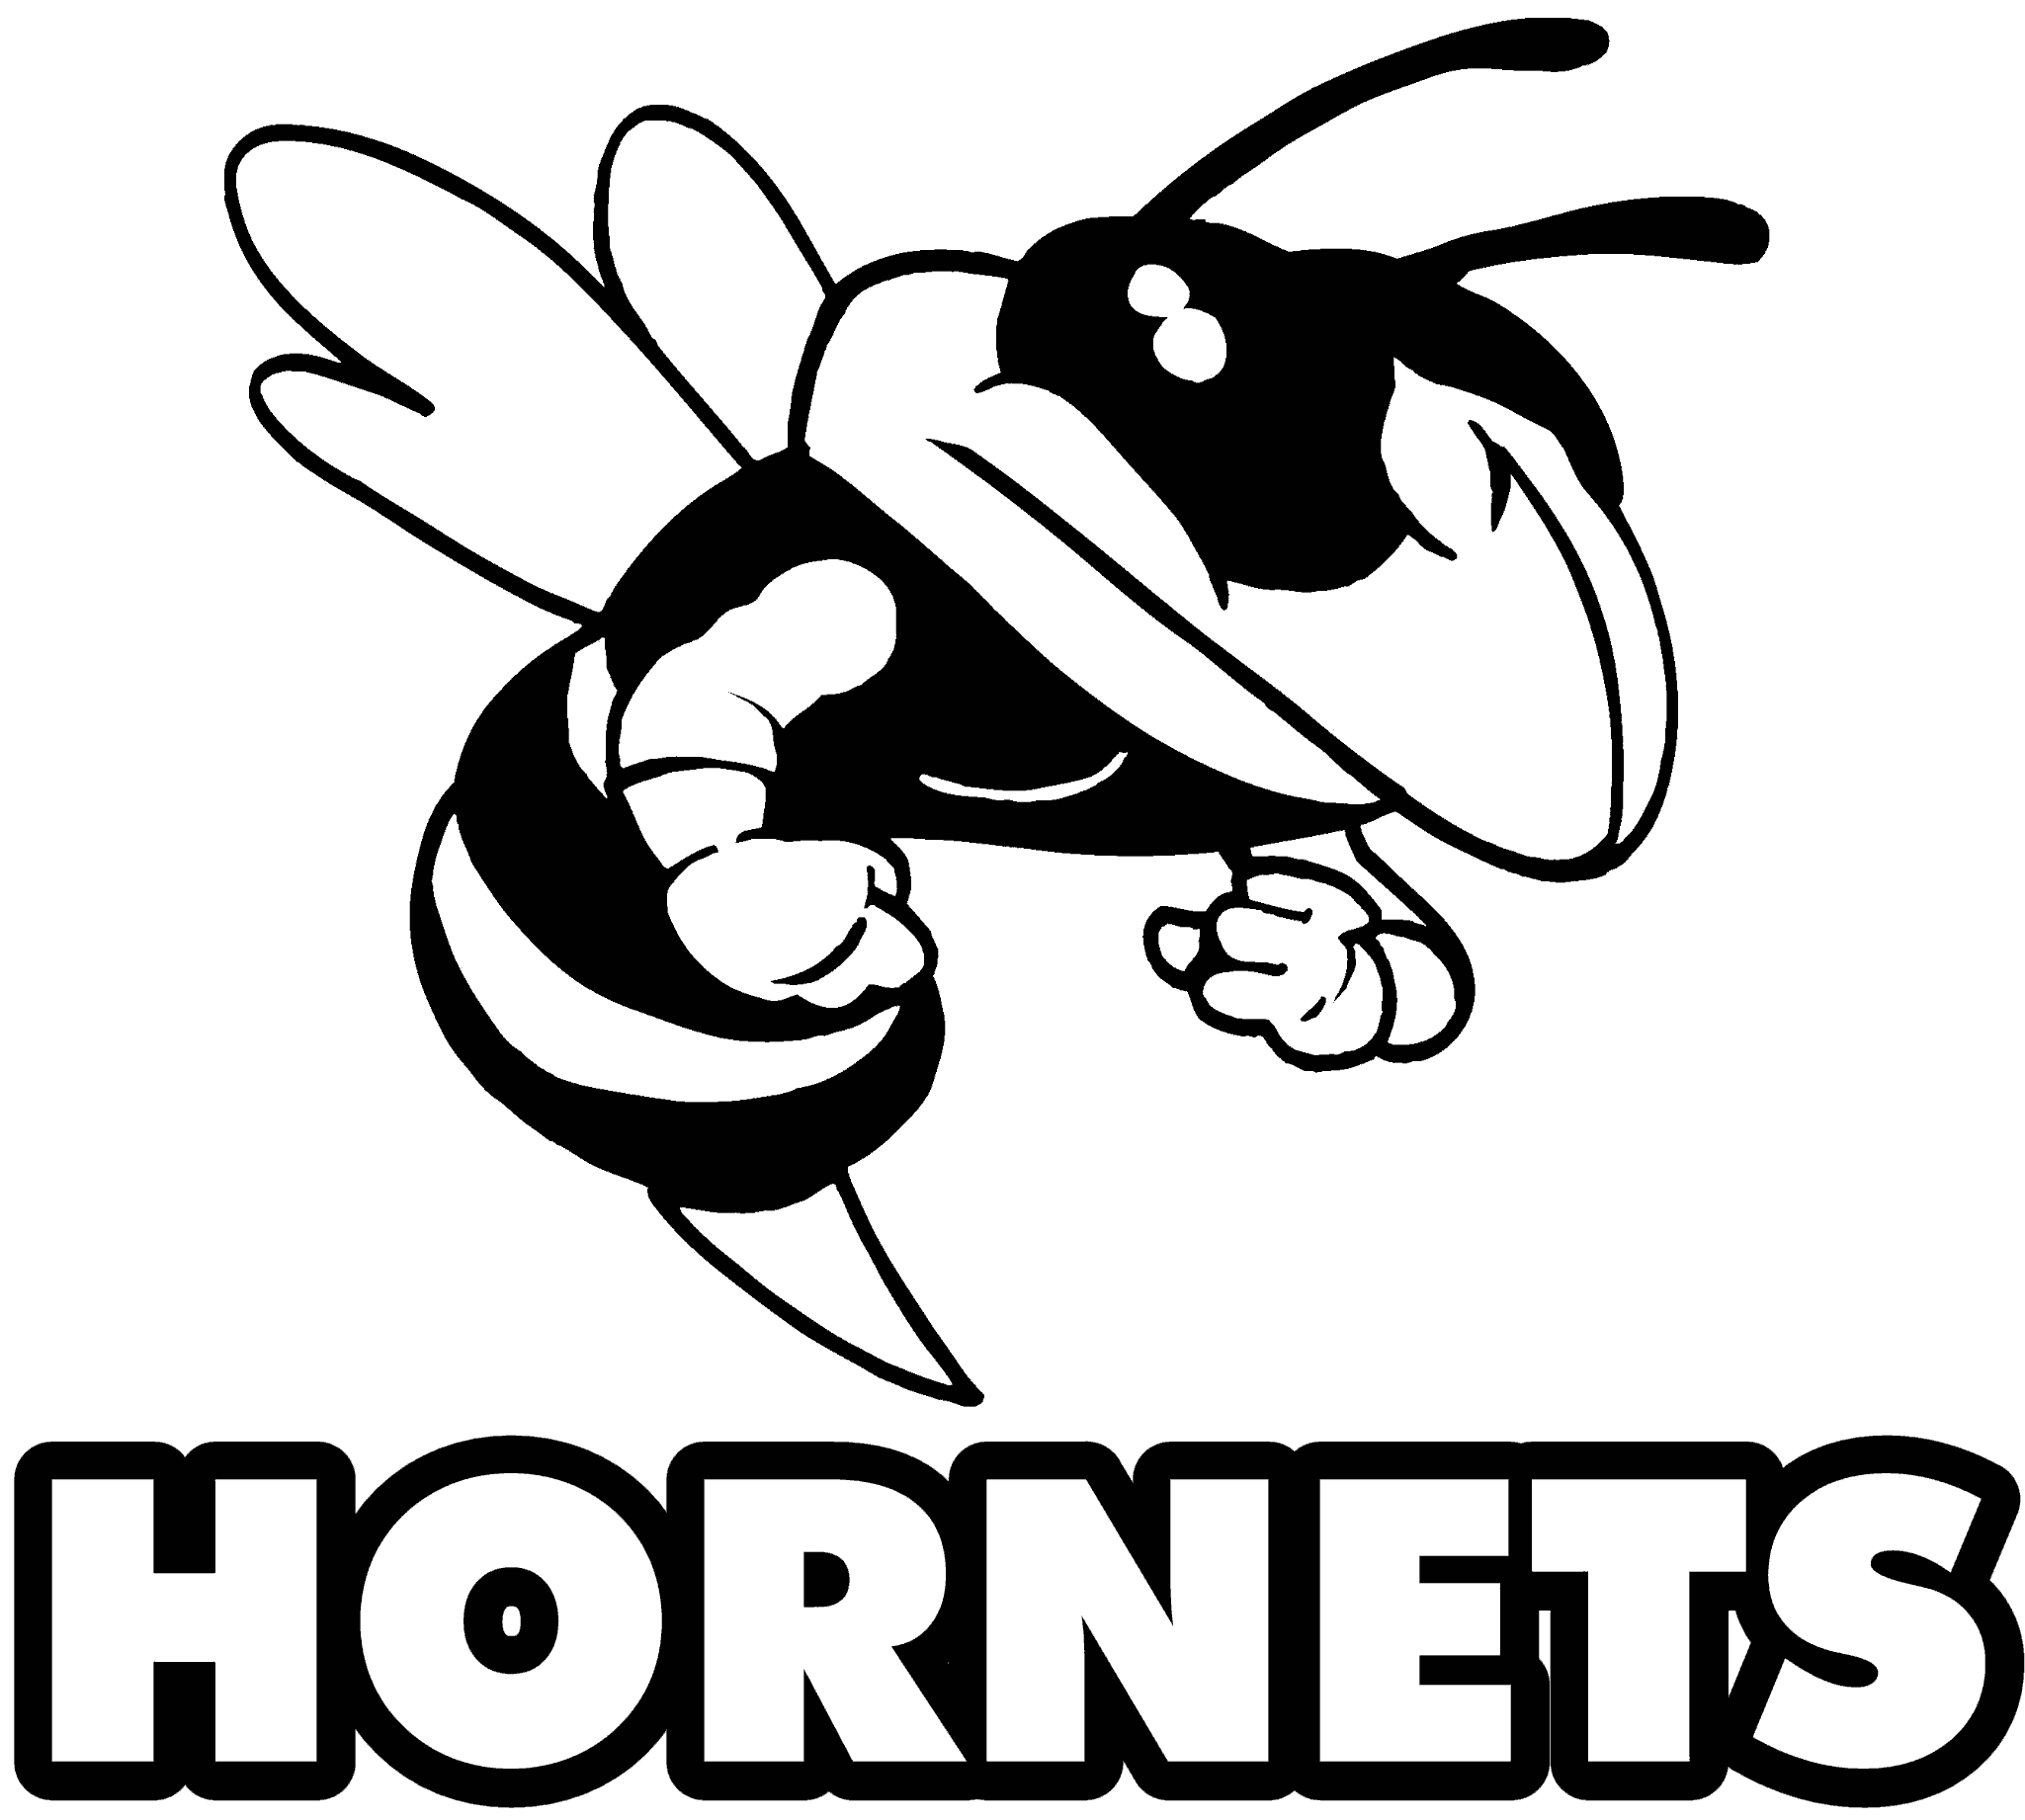 Hornets clip art.